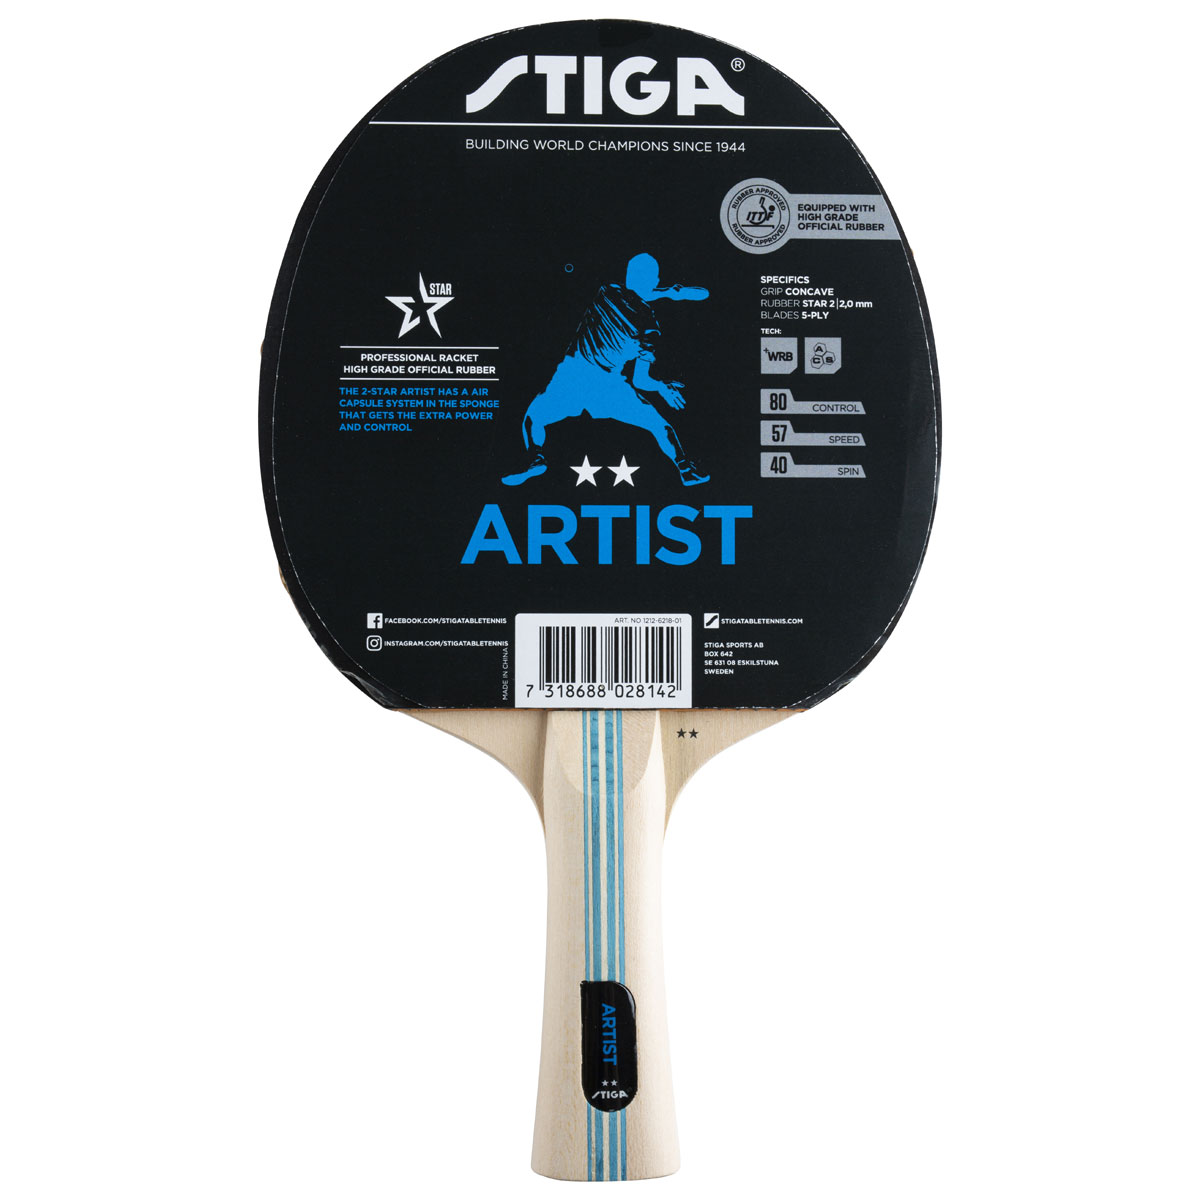 Artist WRB 2* (concave) galda tenisa rakete